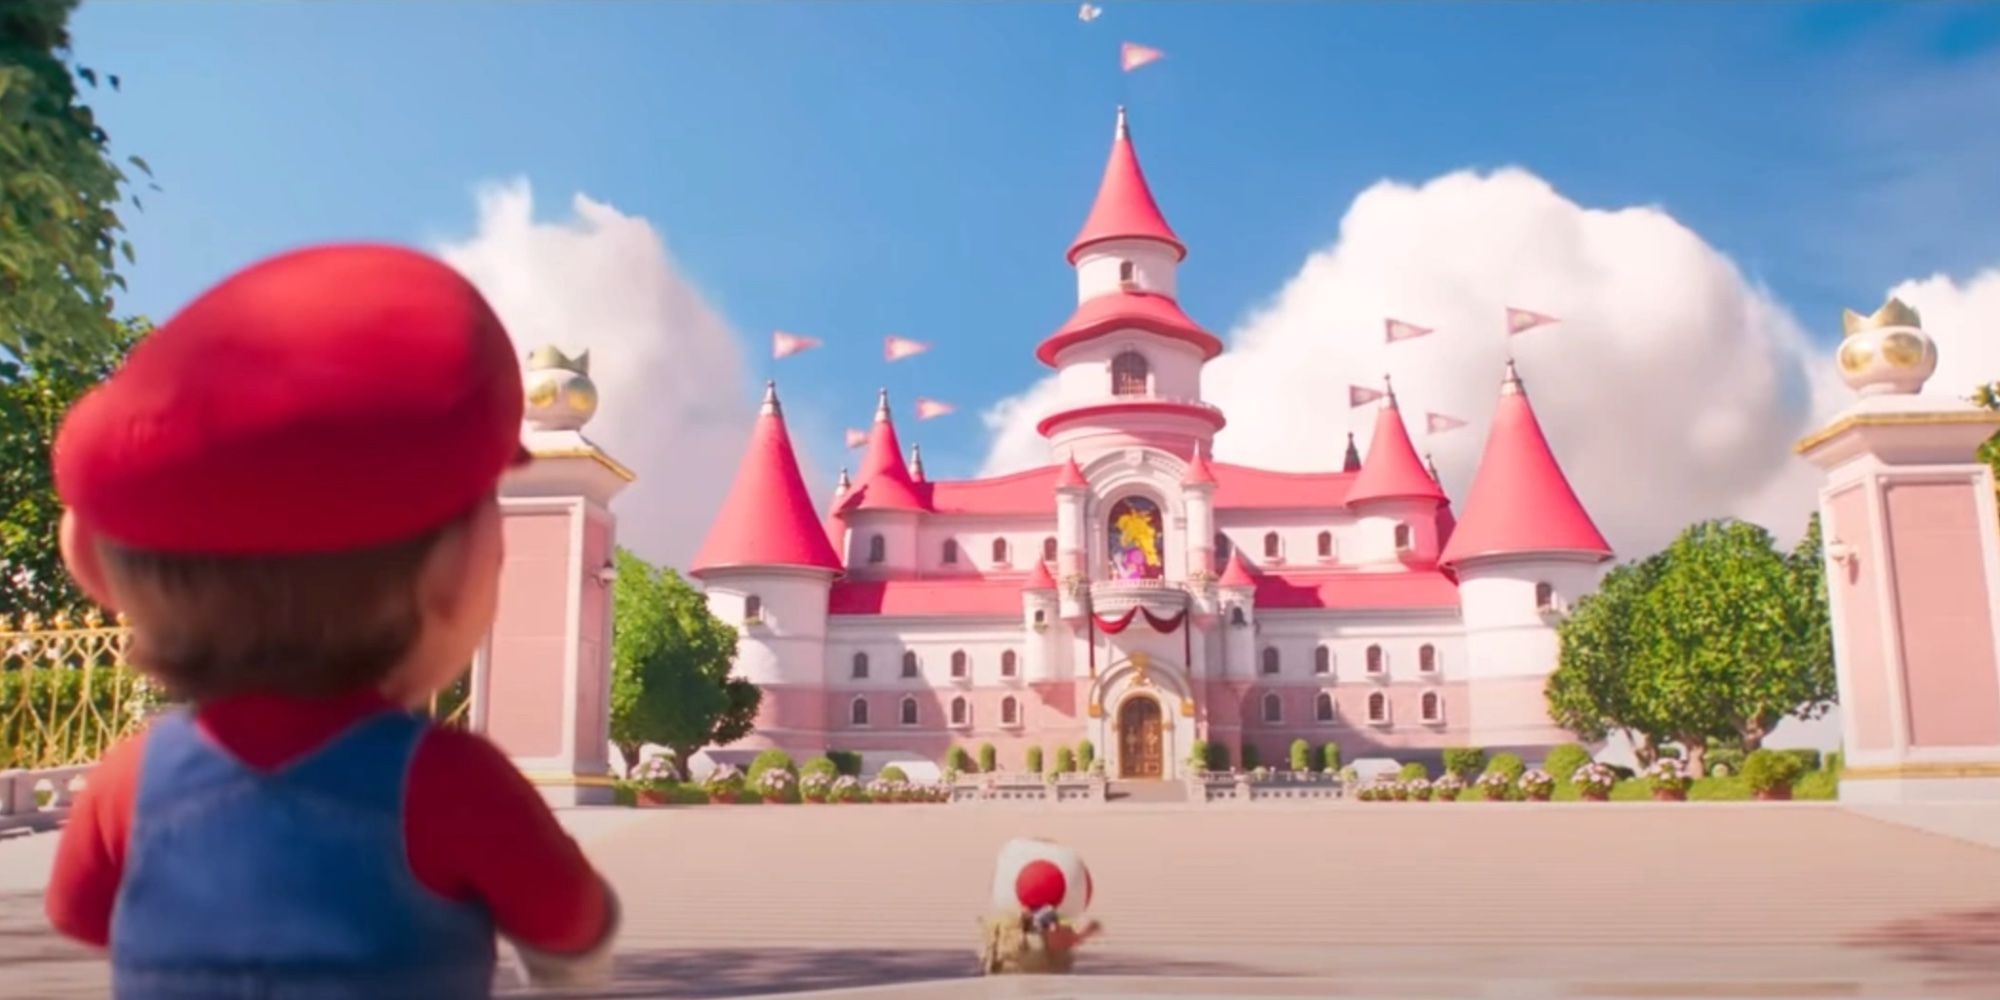 Mario und Toad nähern sich Peach's Castle im Super Mario Bros.-Film